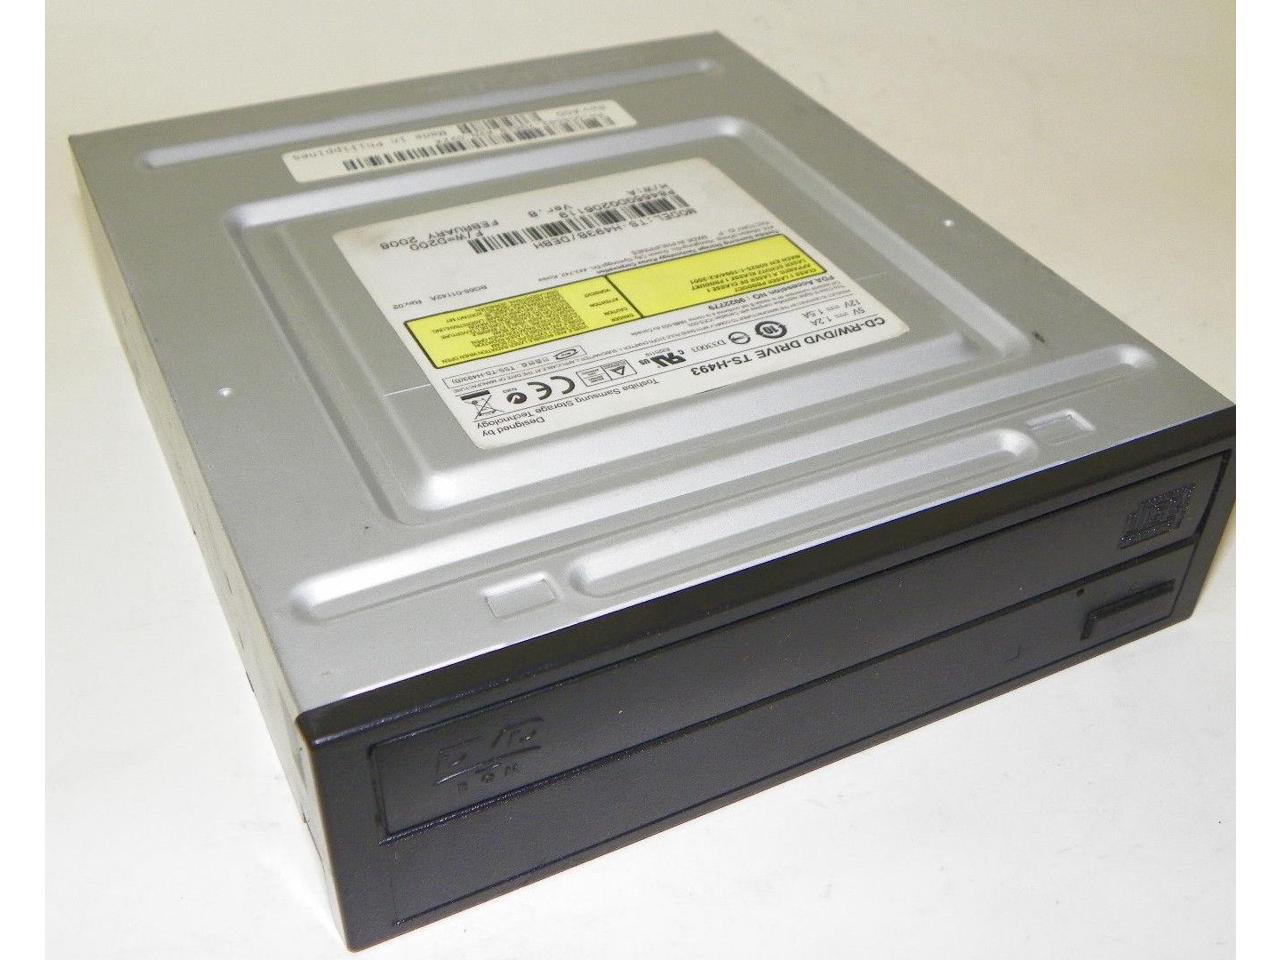 Toshiba-Samsung CD-DVD ROM Combo TS-H493B - Rekes Sales